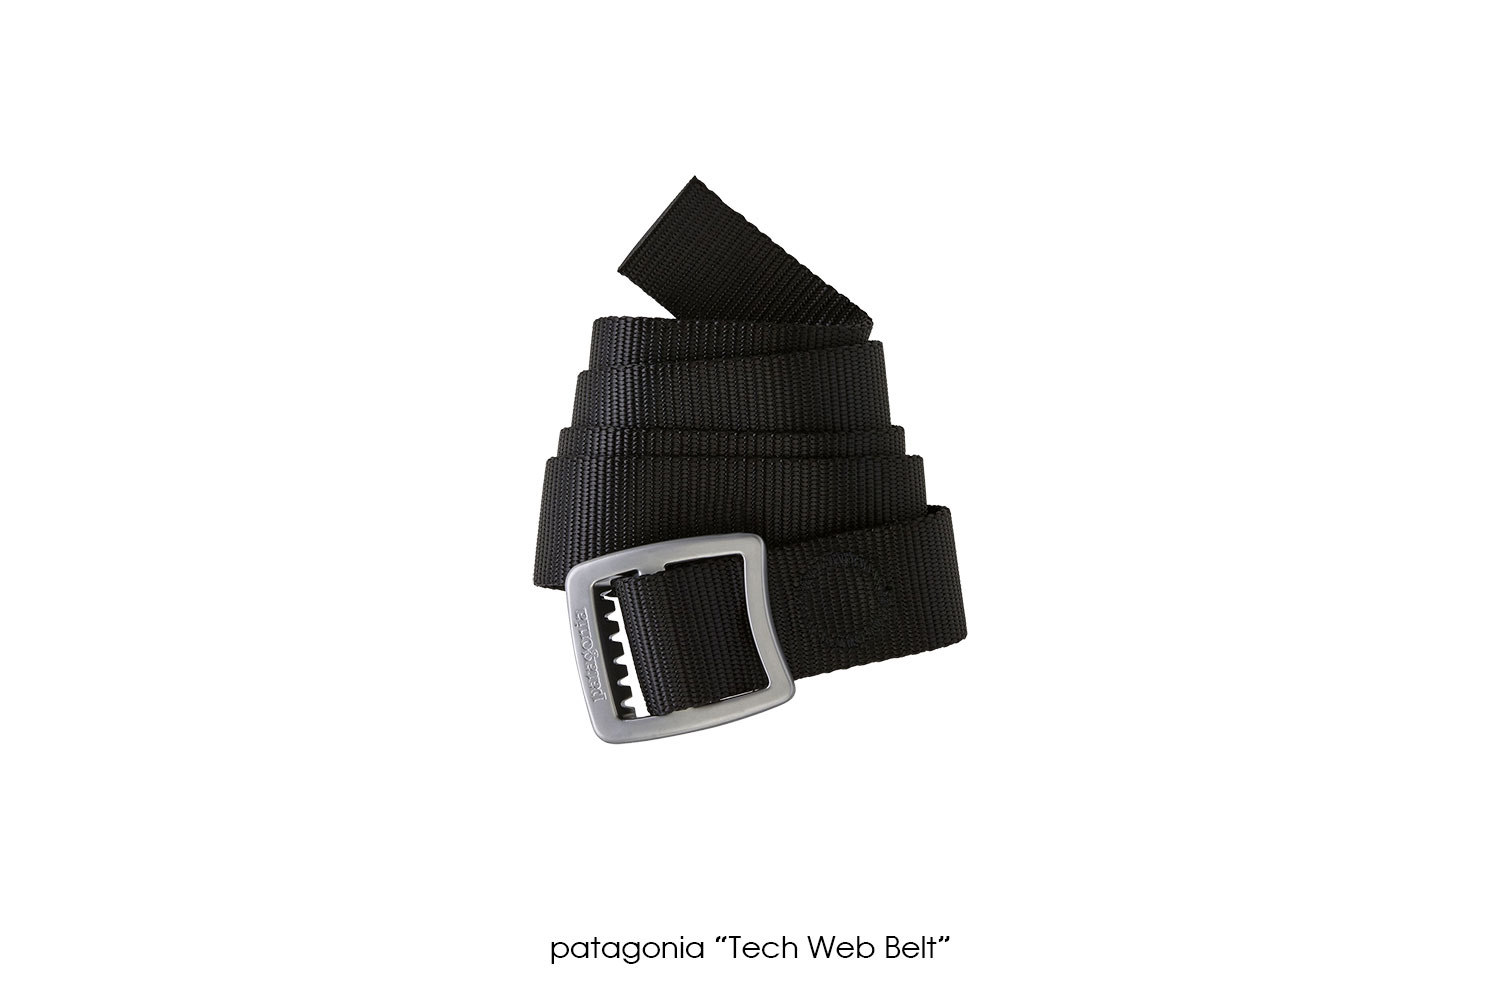 patagonia "Tech Web Belt"